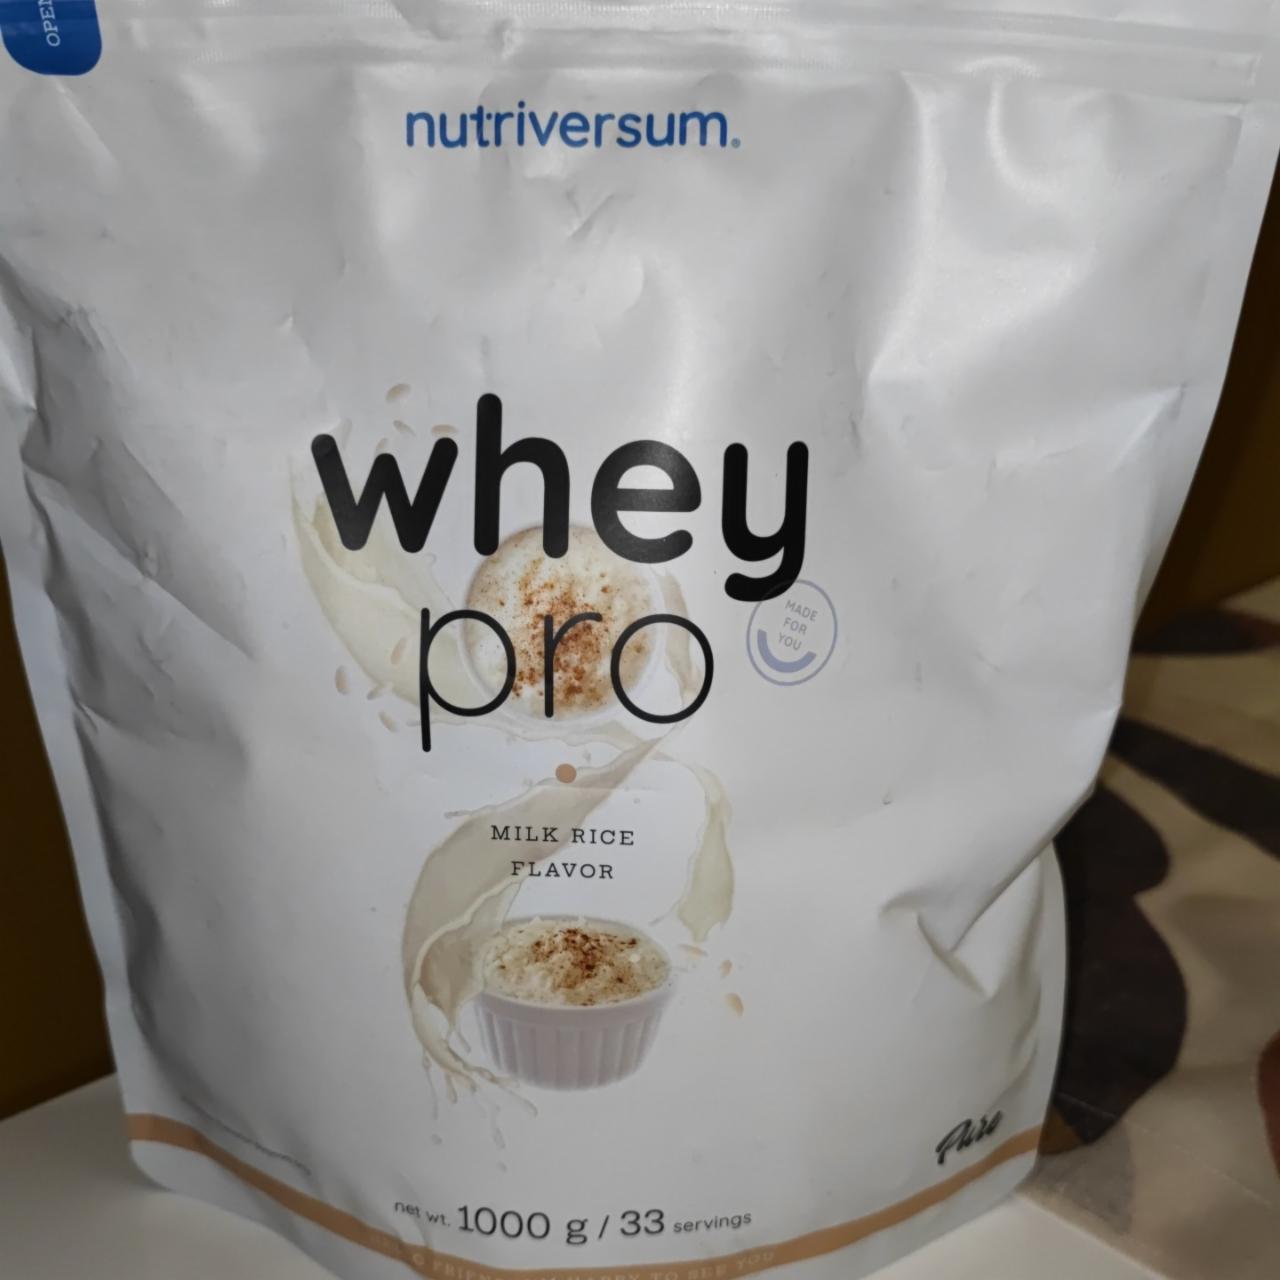 Képek - Whey pro milk rice flavour Nutriversum